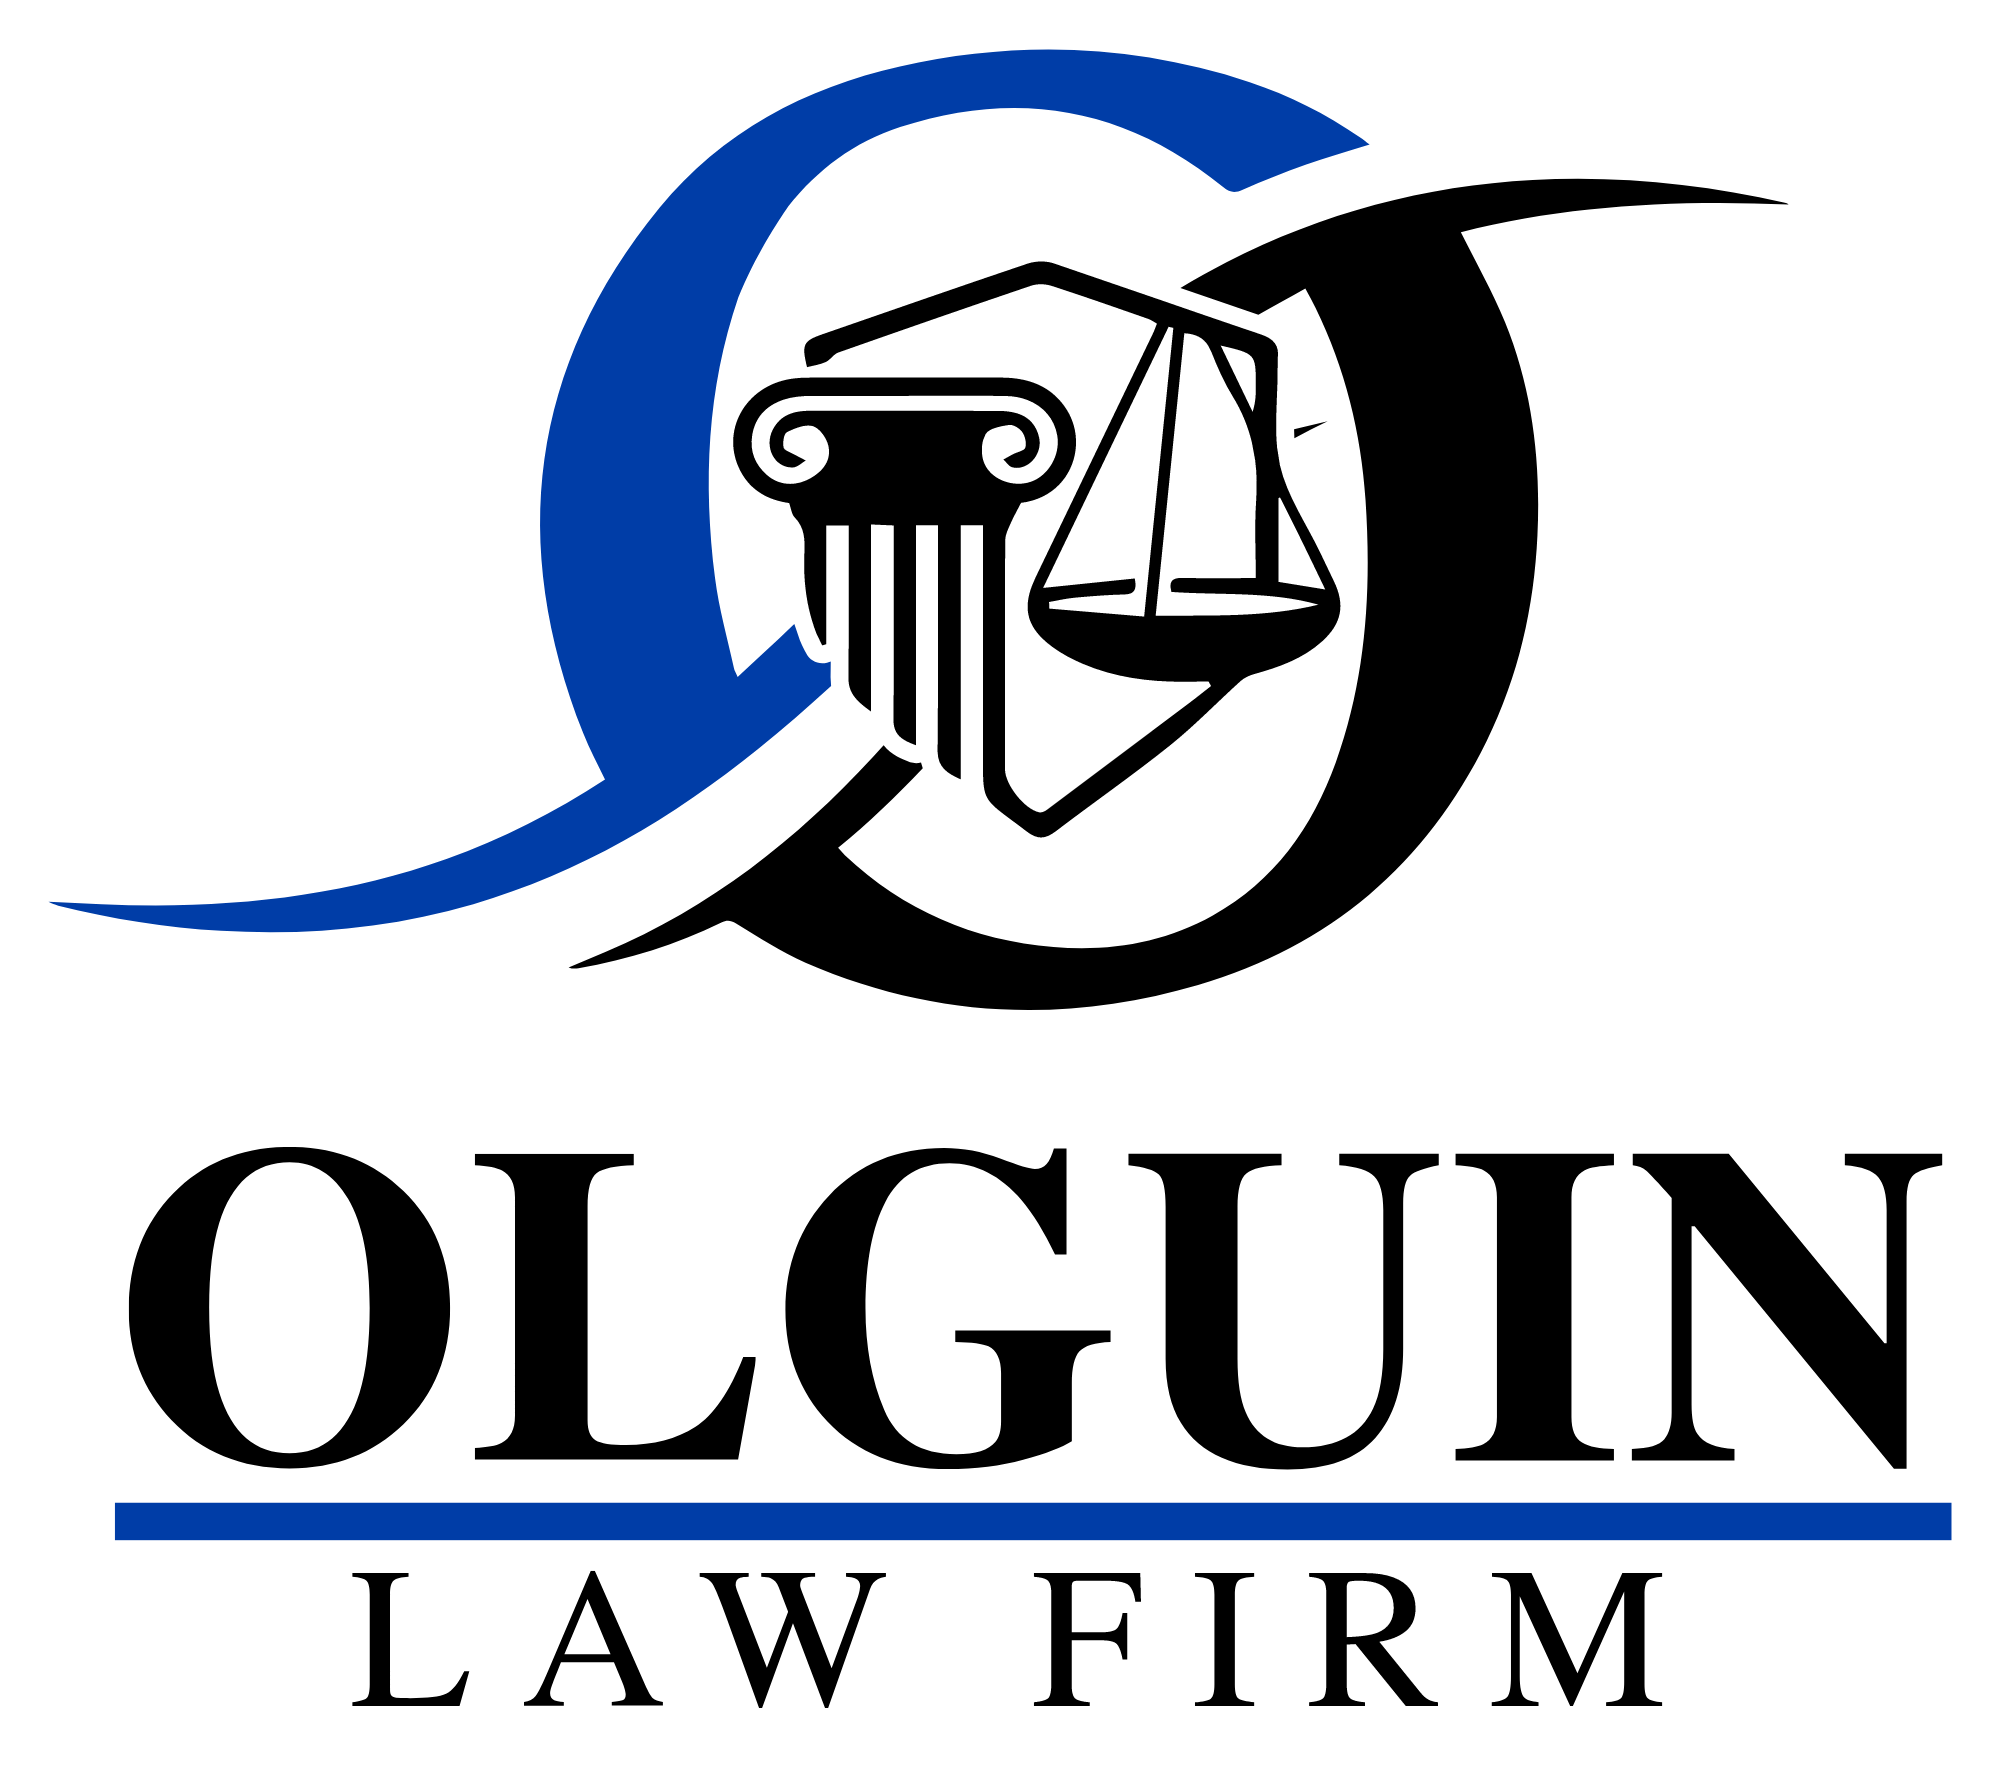 Olguin Law Firm